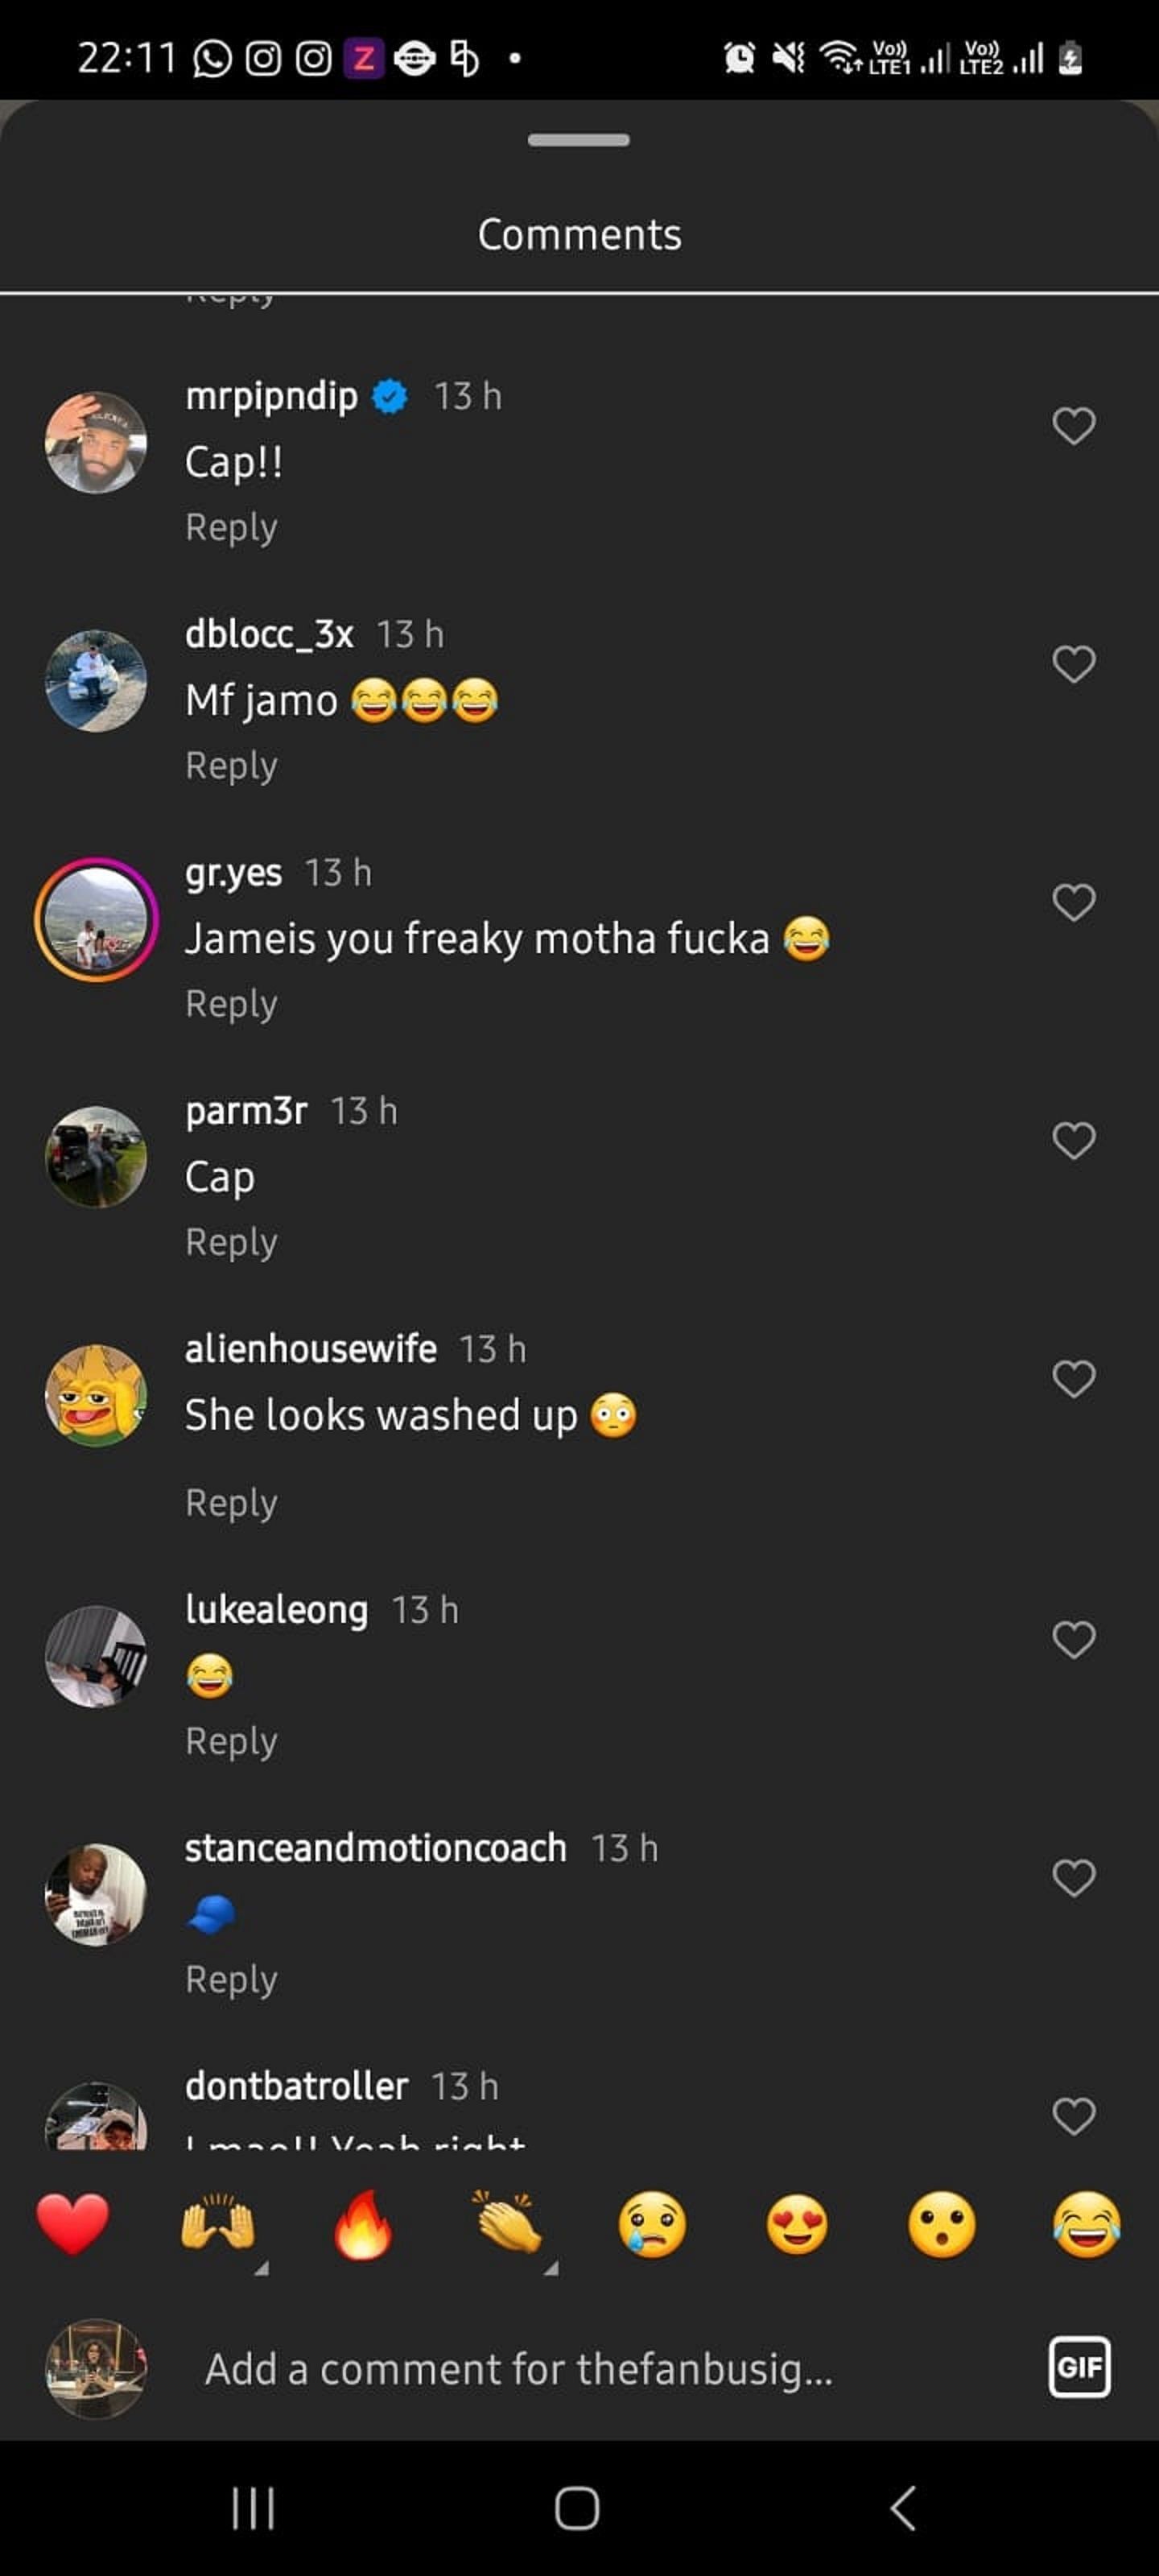 Instagram Screenshot - Comments from Buccaneers Fans